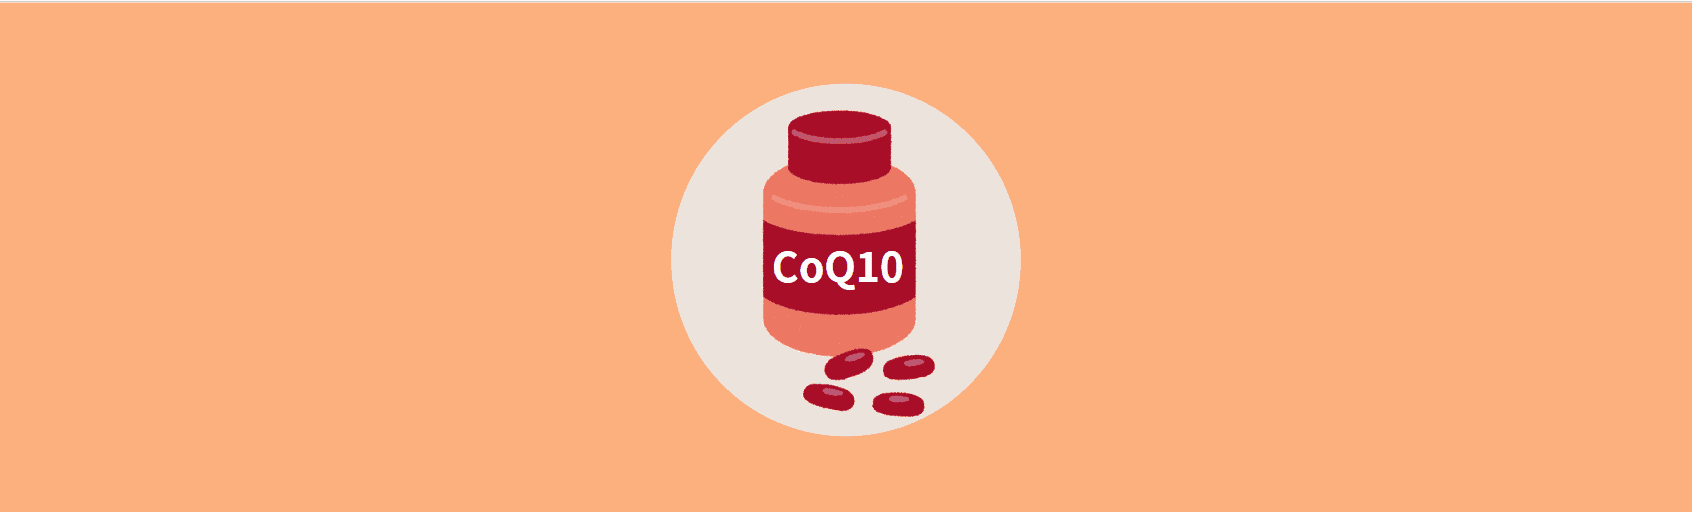 COQ10 supplements